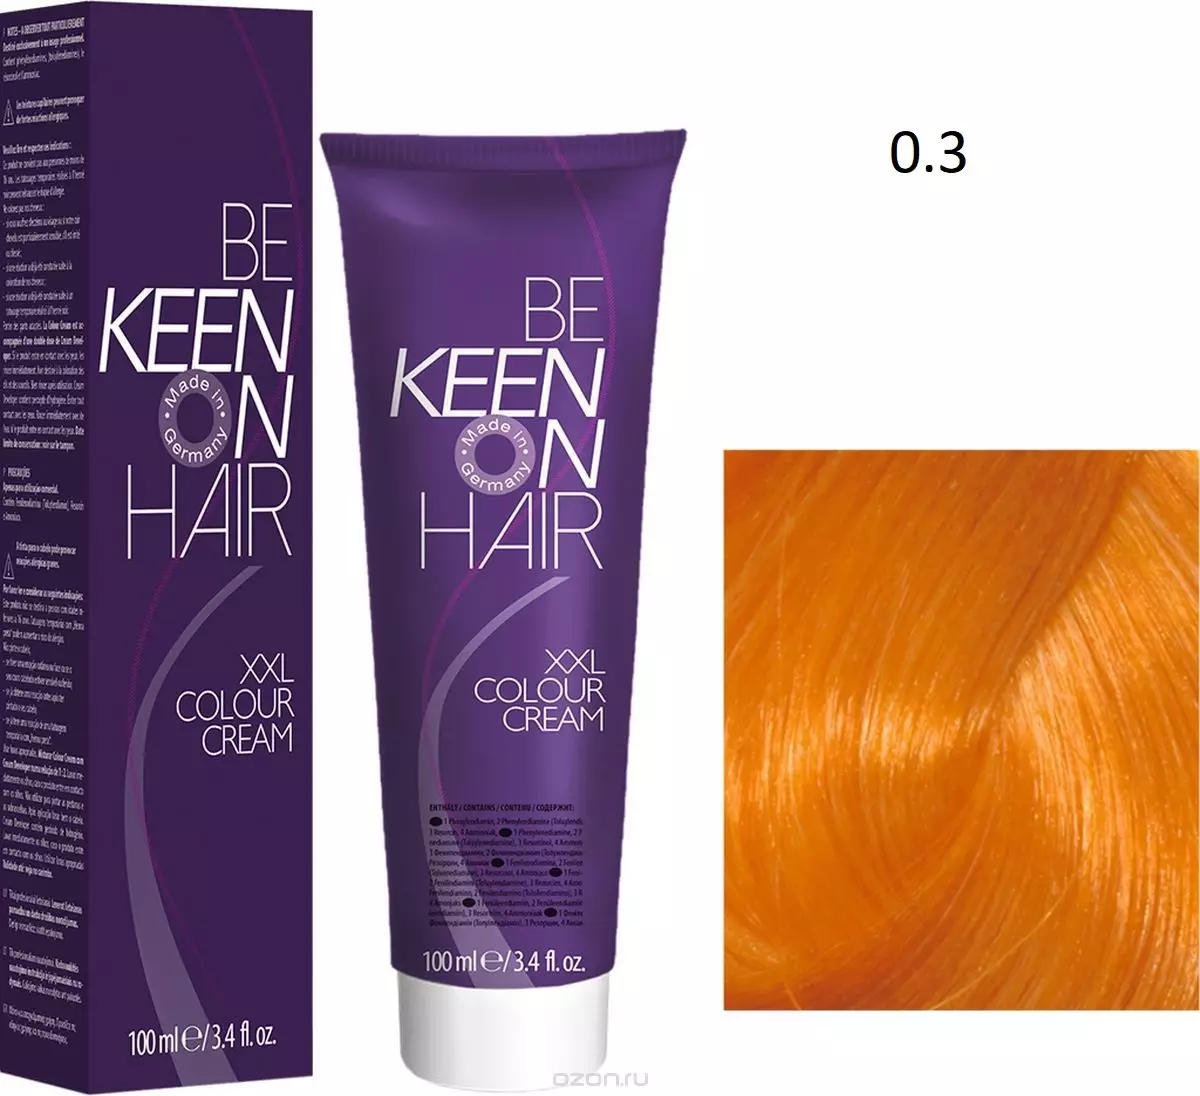 Keen Hair Paint (26 photos): Professional German Paint Be Keen On Hair, Flower Palette, Reviews 5397_16